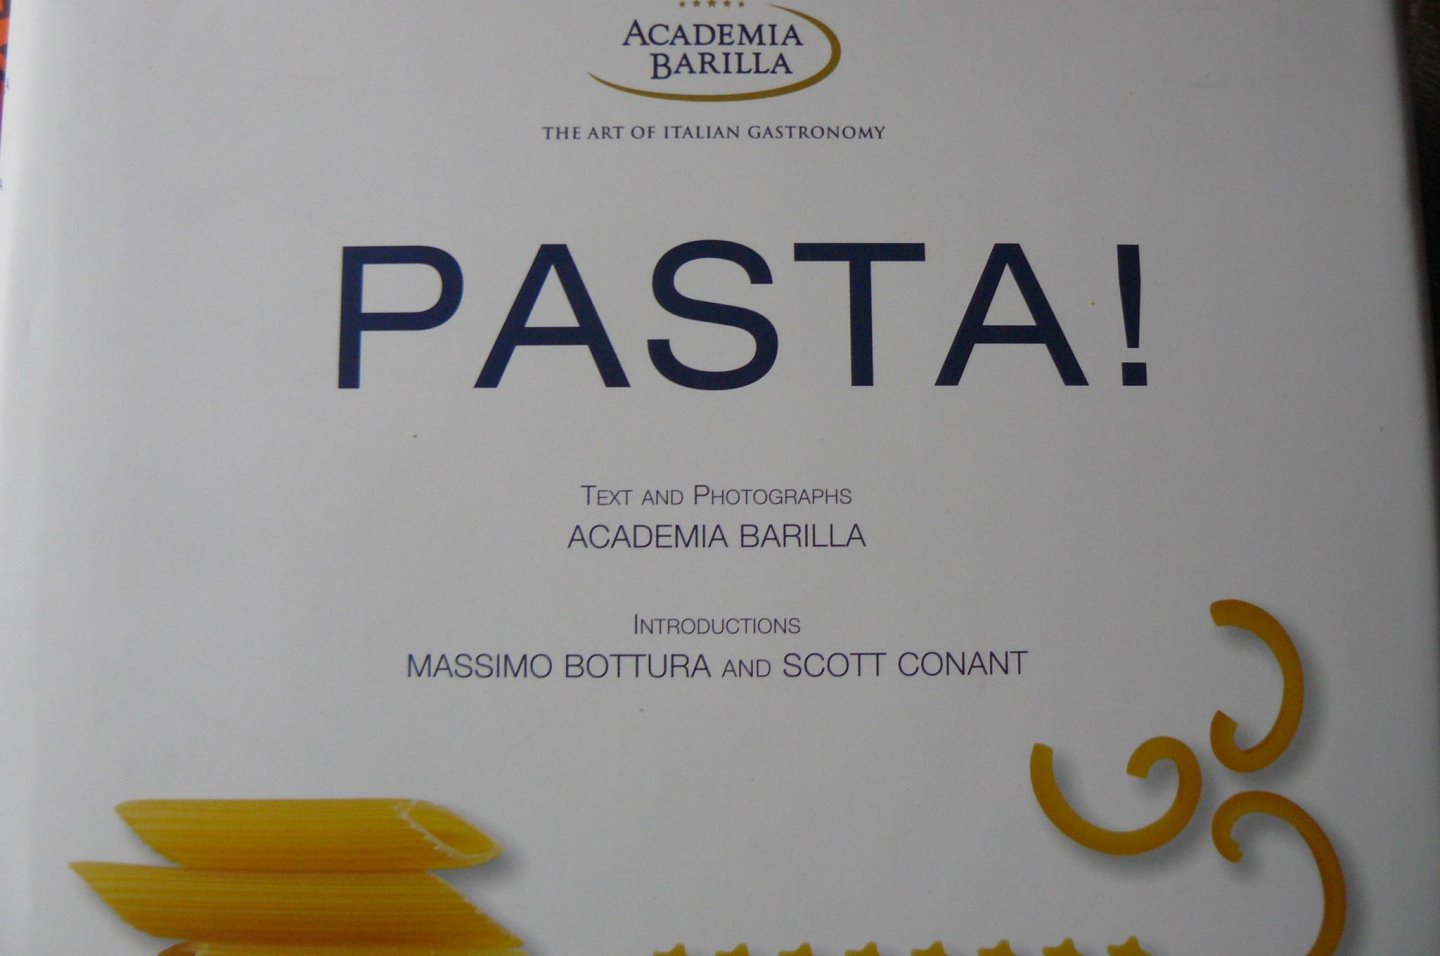 Academia Barilla - Pasta!